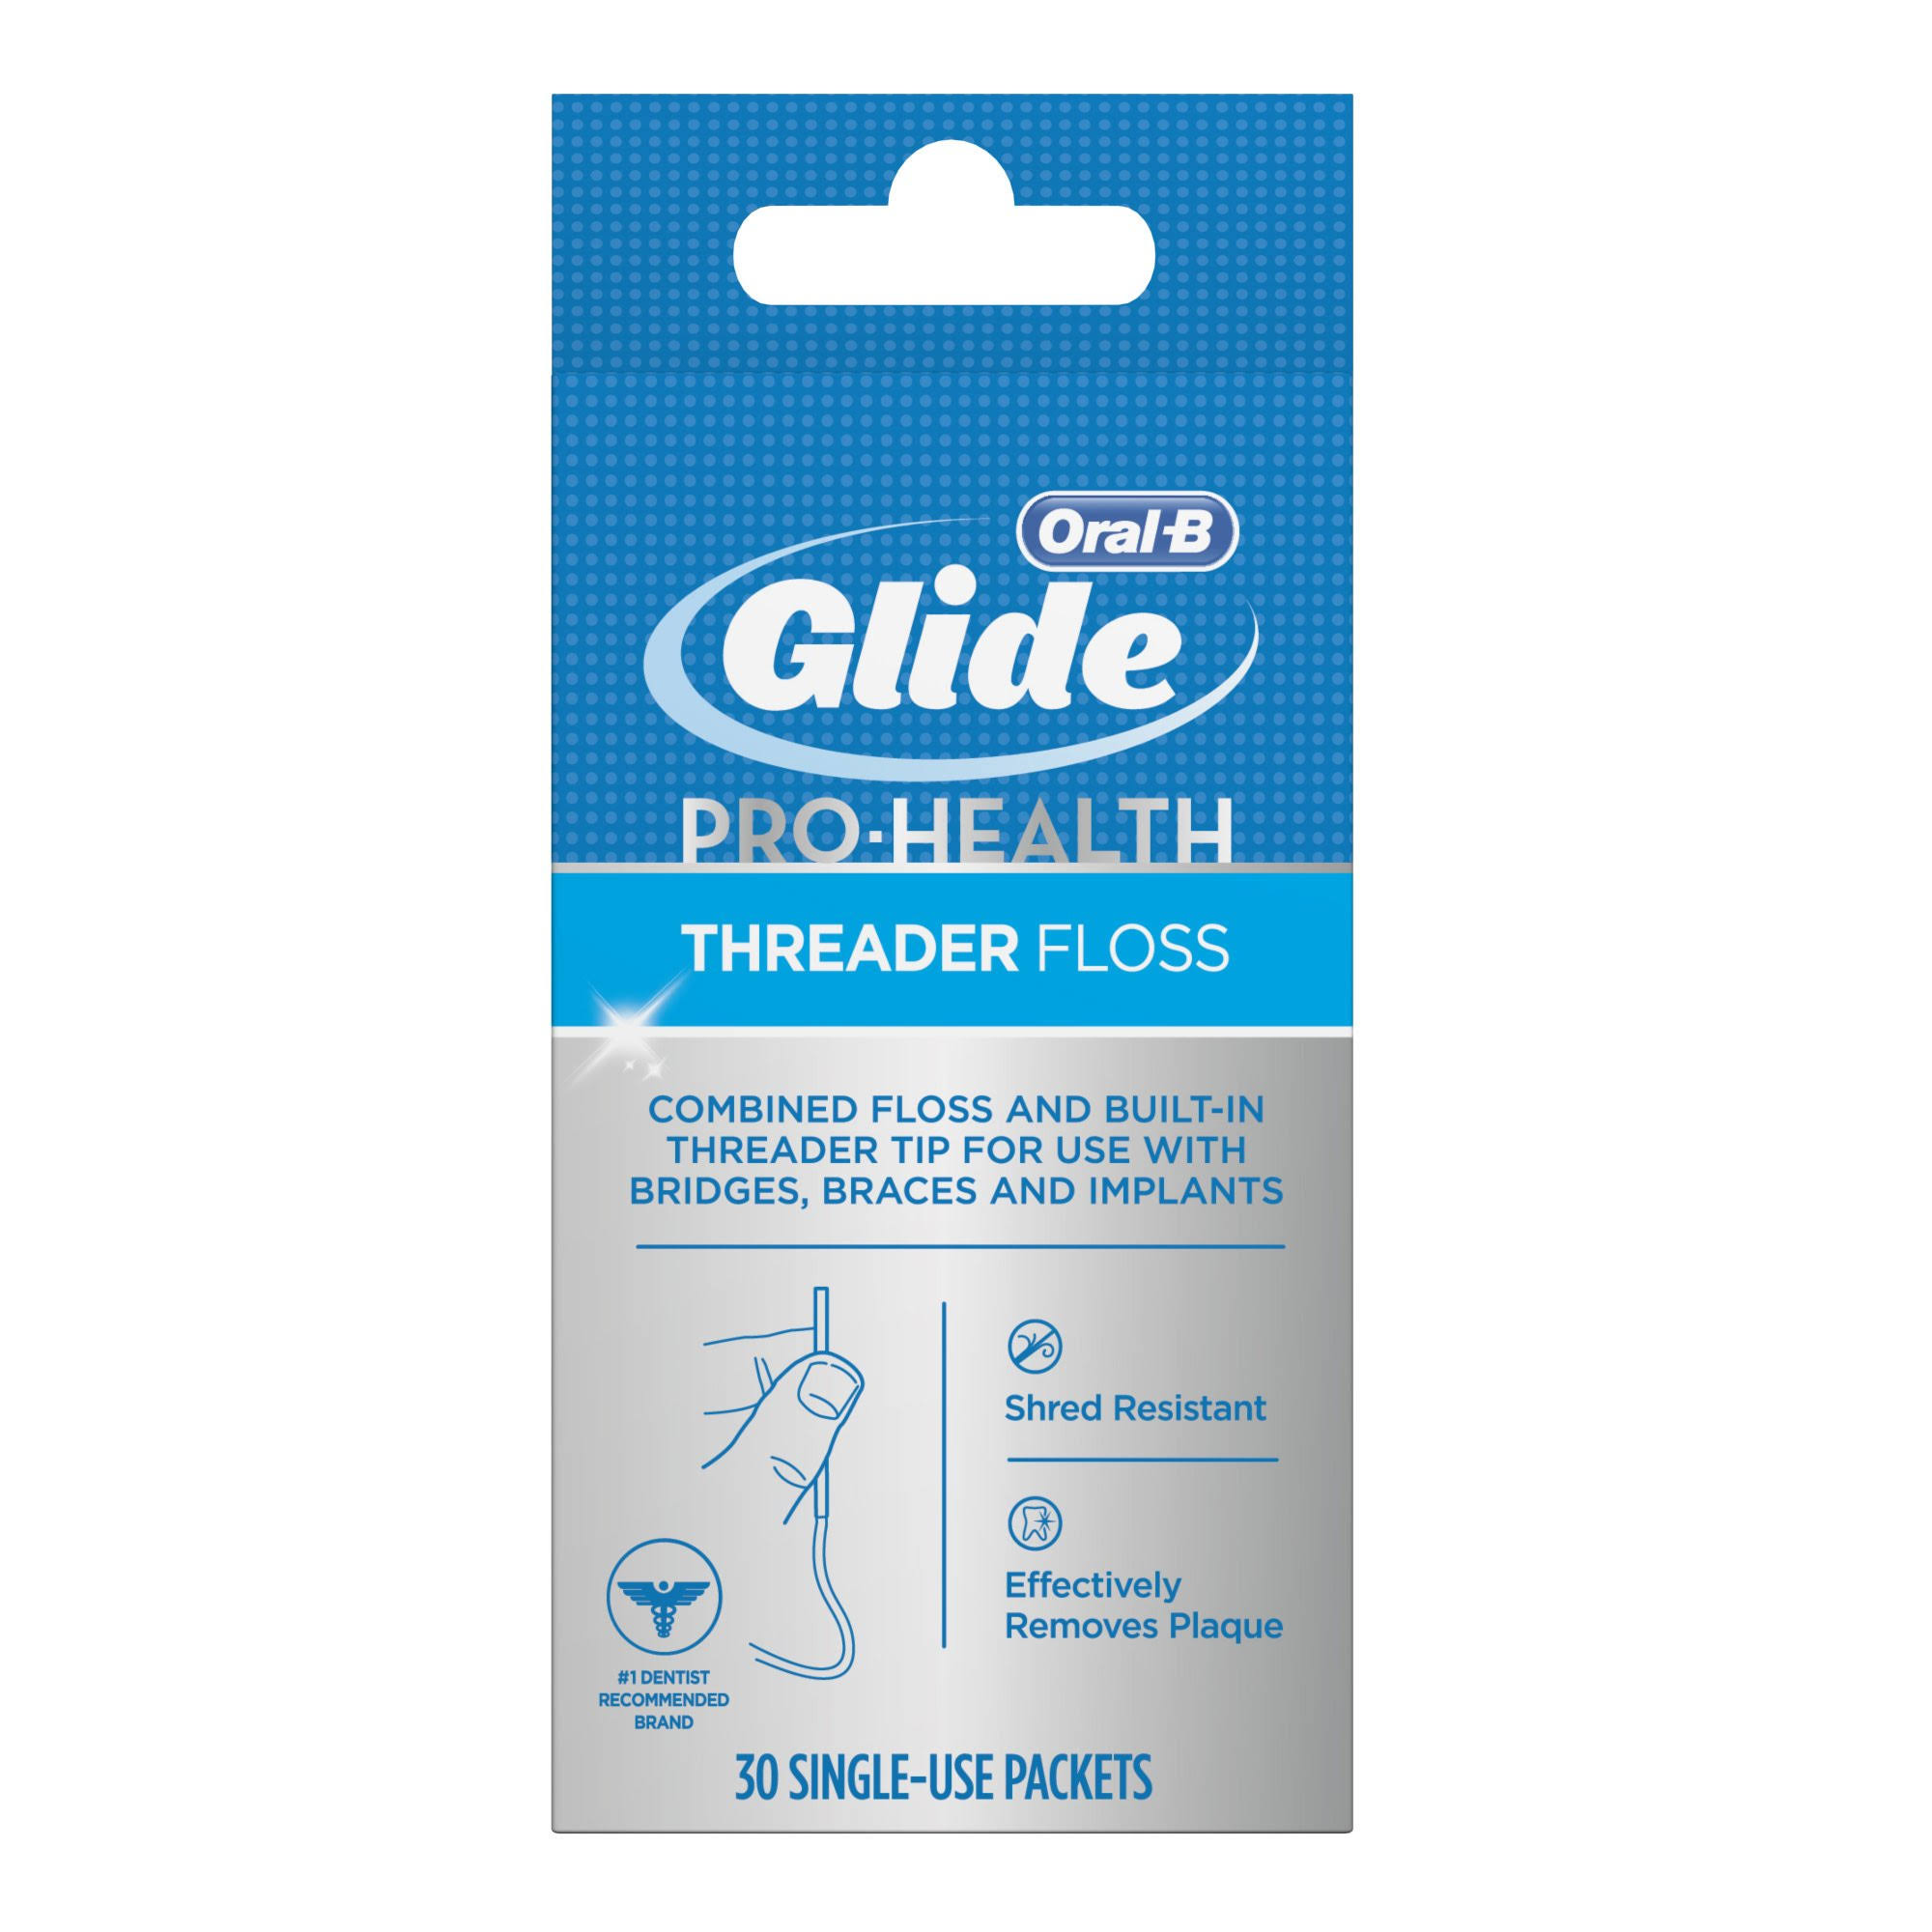 Oral-B Glide Pro-Health Threader Floss - 30 Count